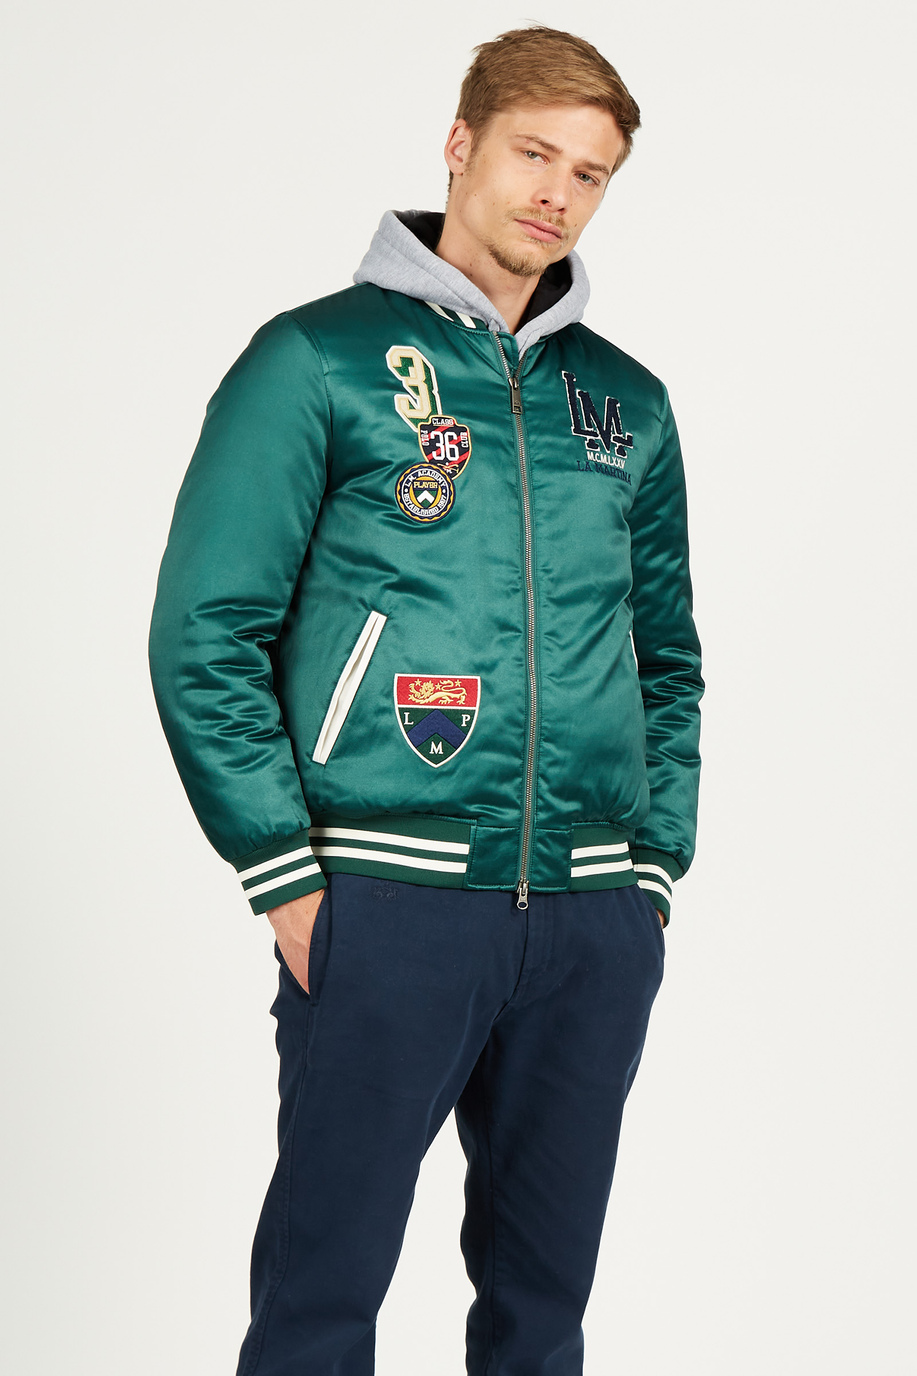 Men's bomber jacket in satin effect cotton blend, regular fit - Outerwear | La Martina - Official Online Shop